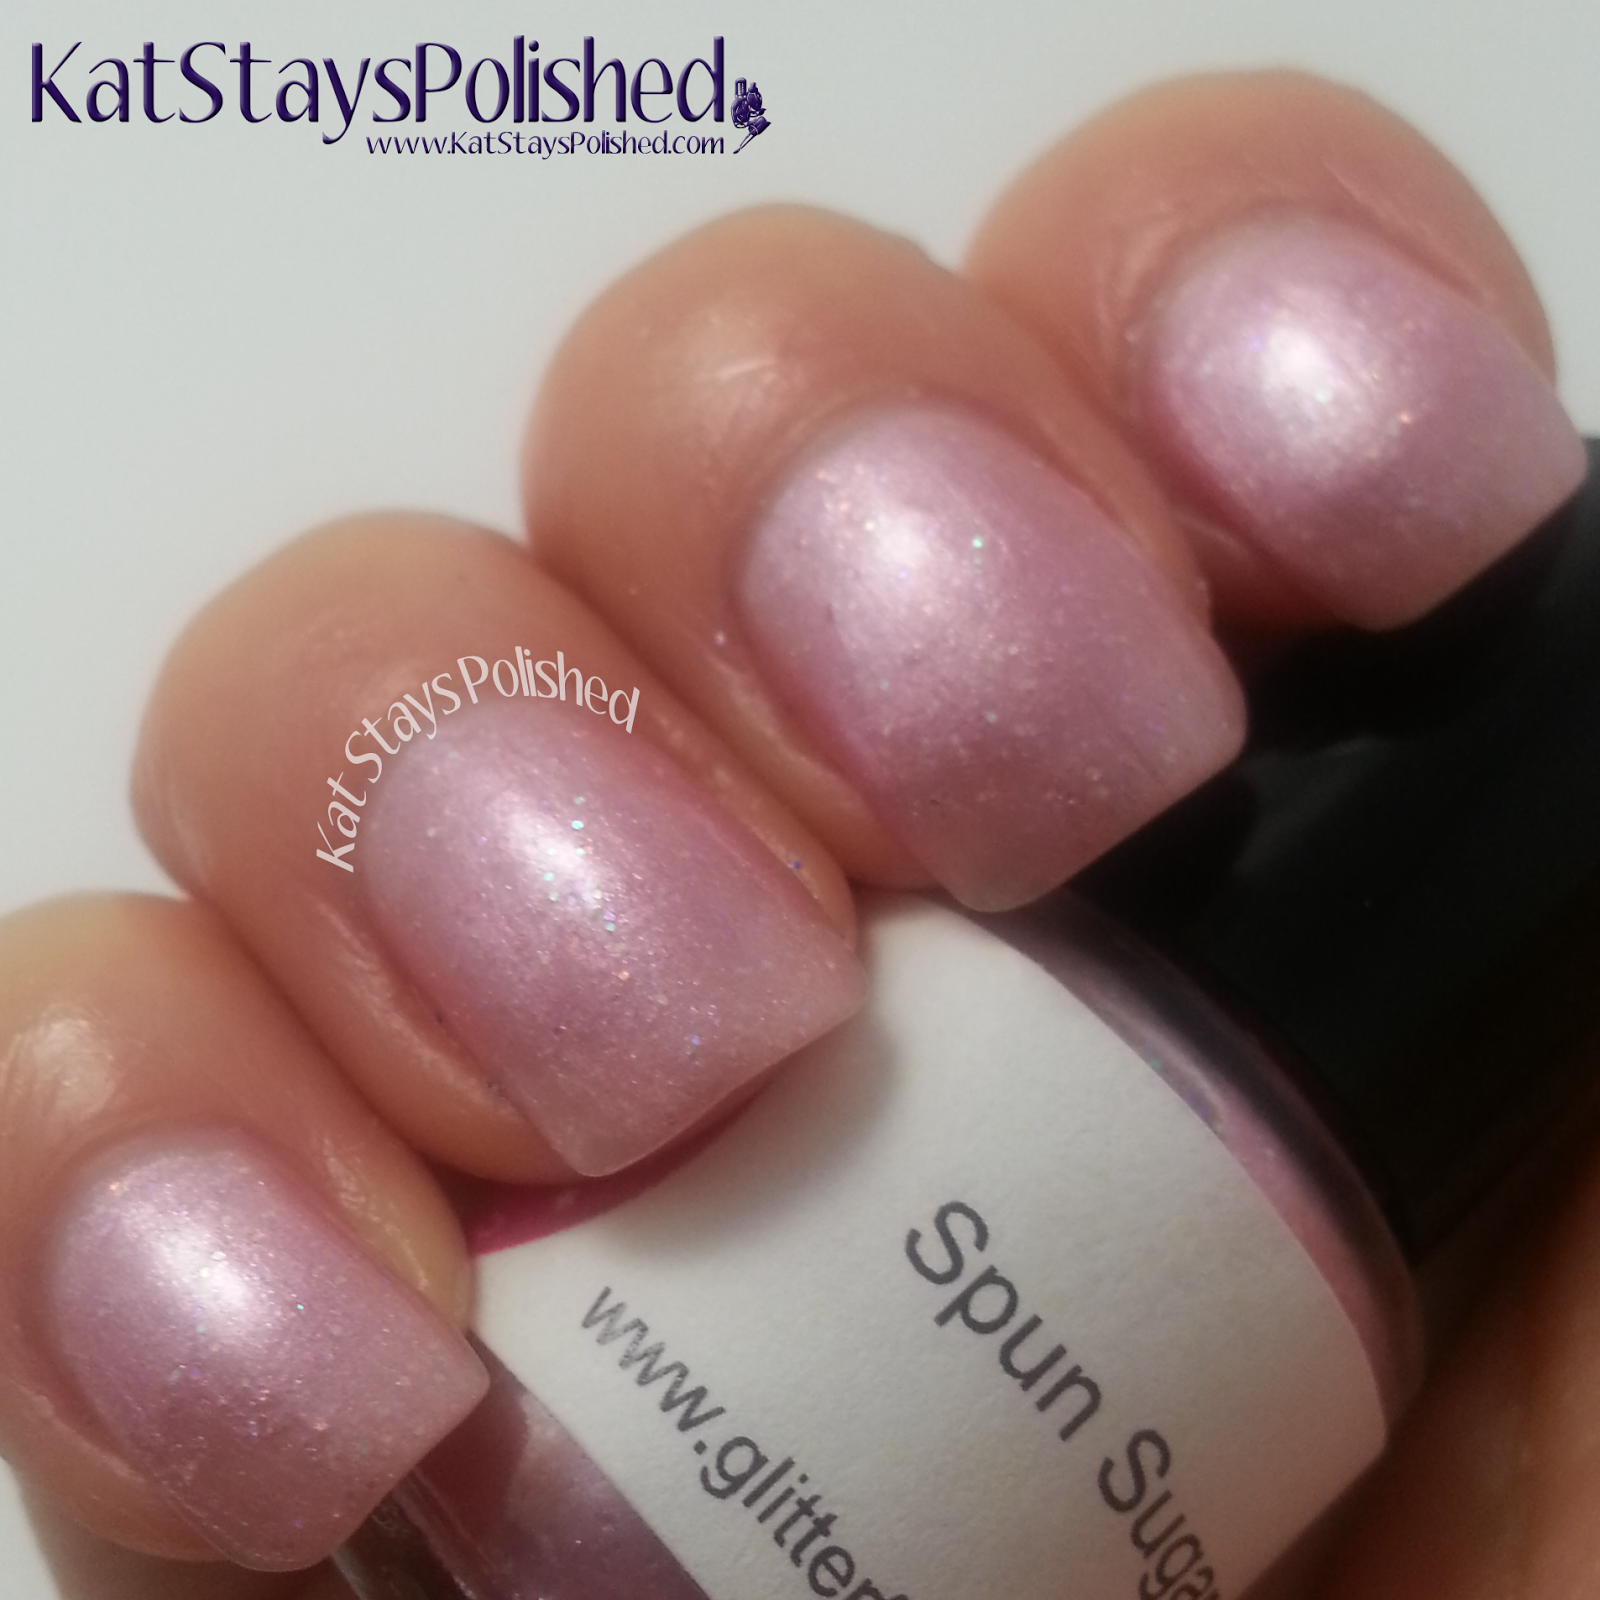 Glitterfied Nails - Spun Sugar | Kat Stays Polished